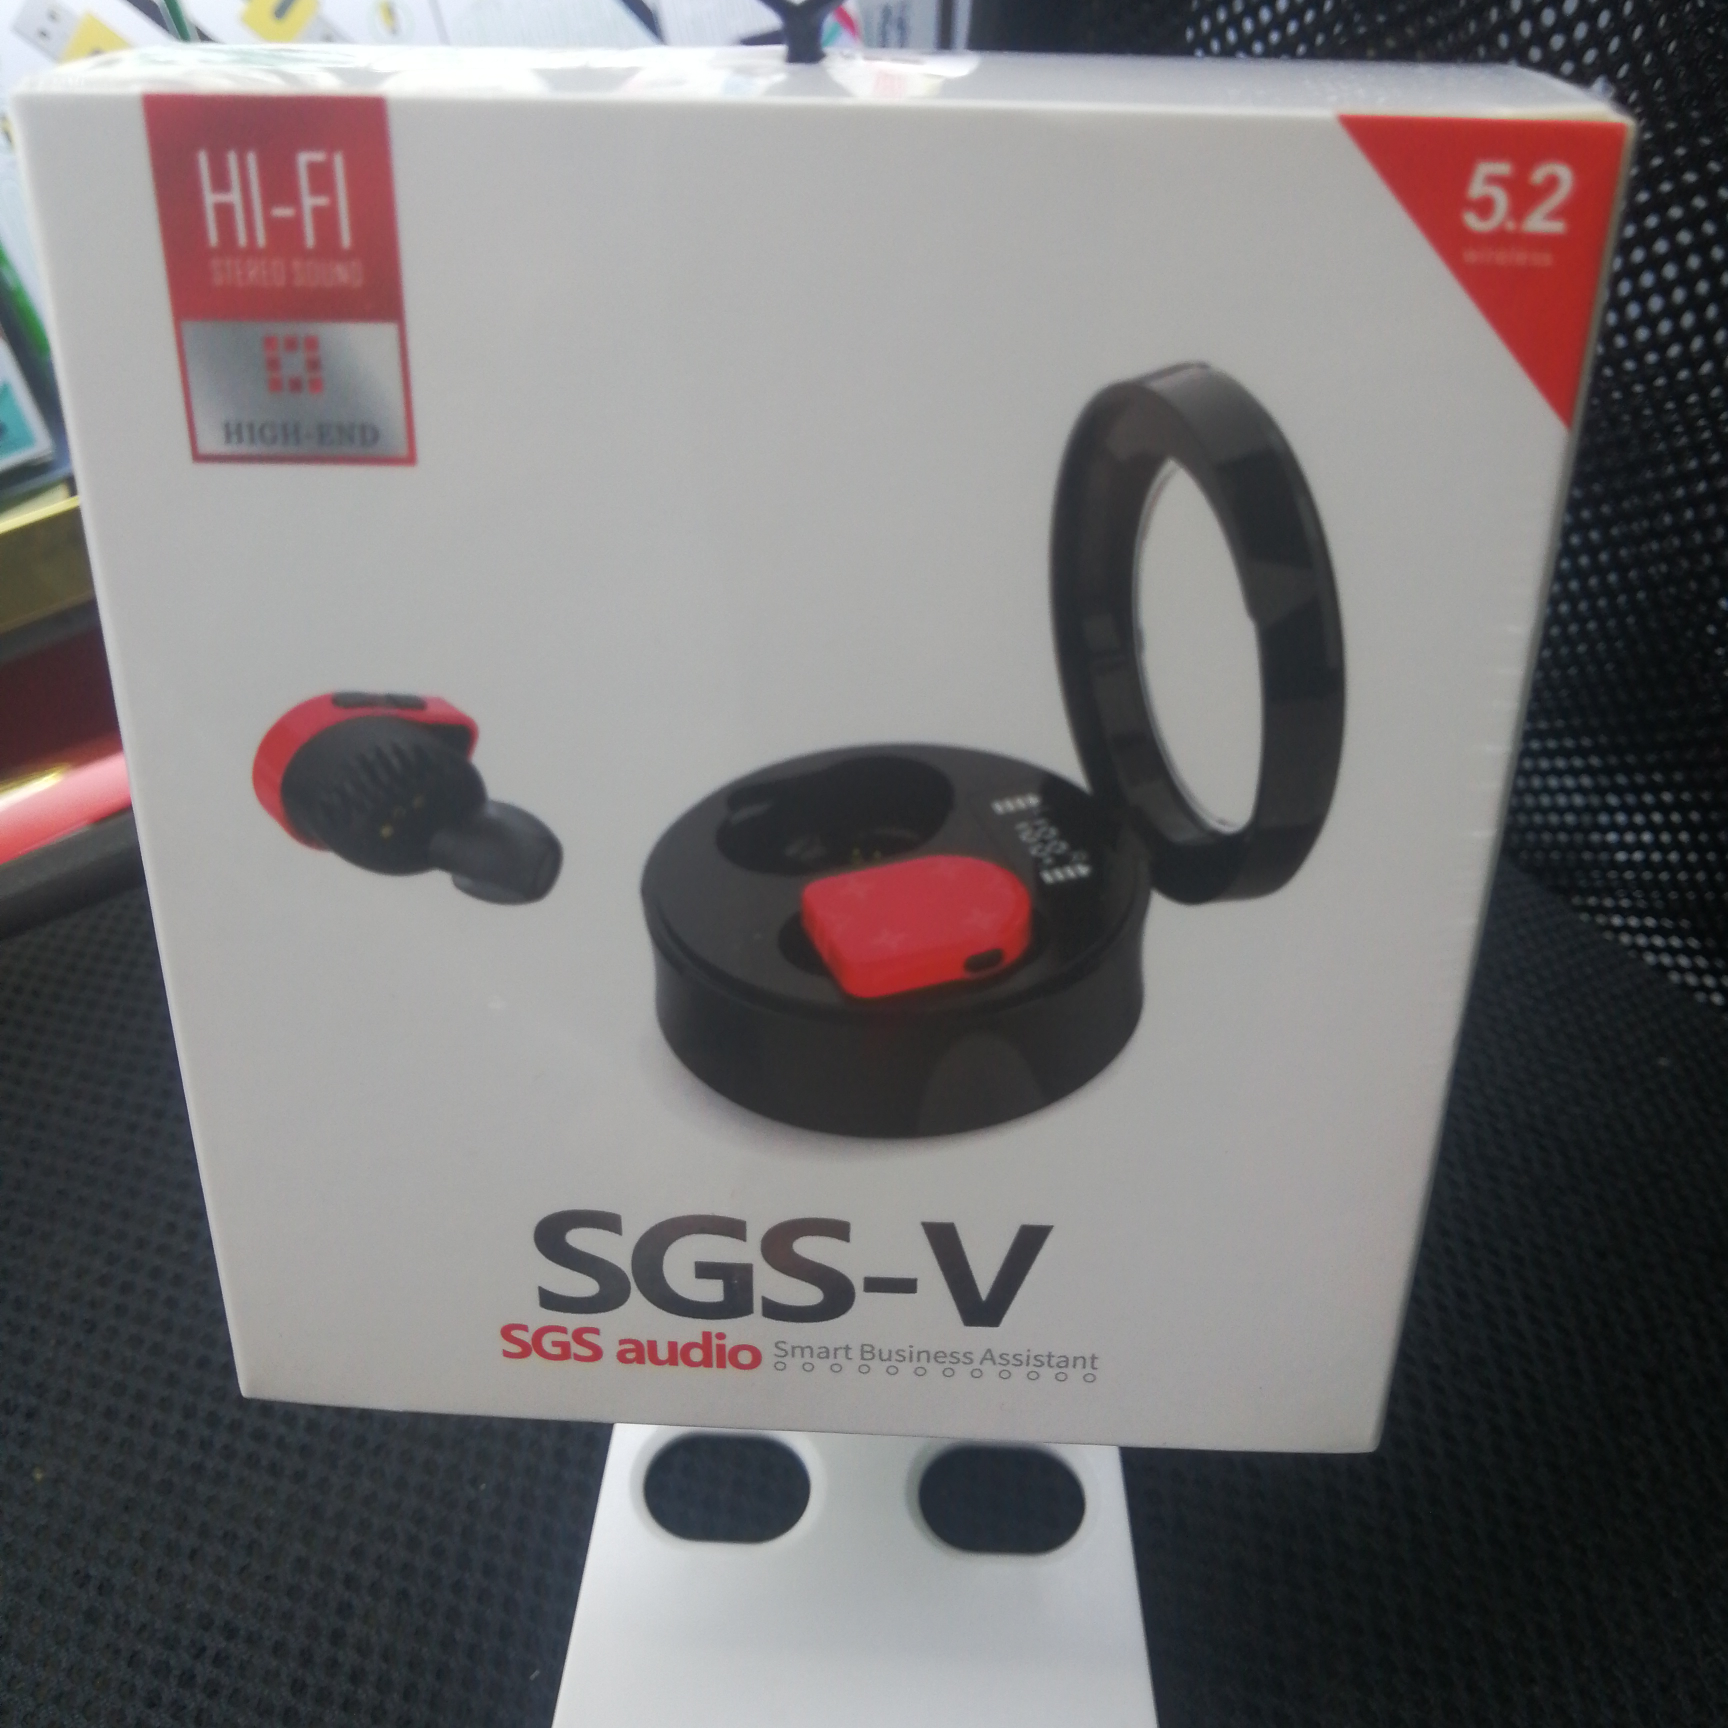 SGS-V (Wireless Bluetooth Headset)